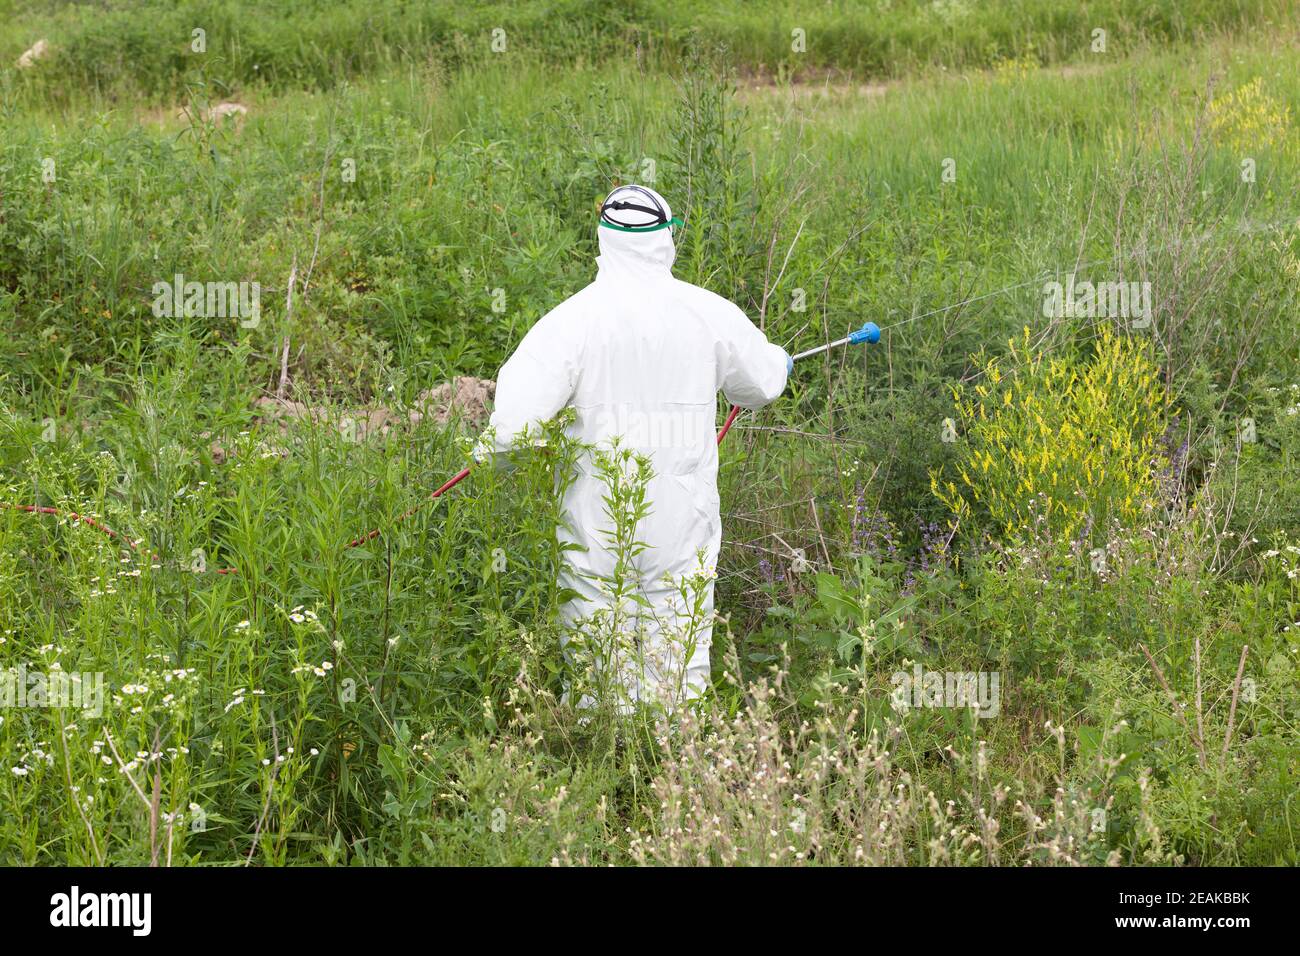 Man in protective workwear spraying herbicide on ragweed Stock Photo